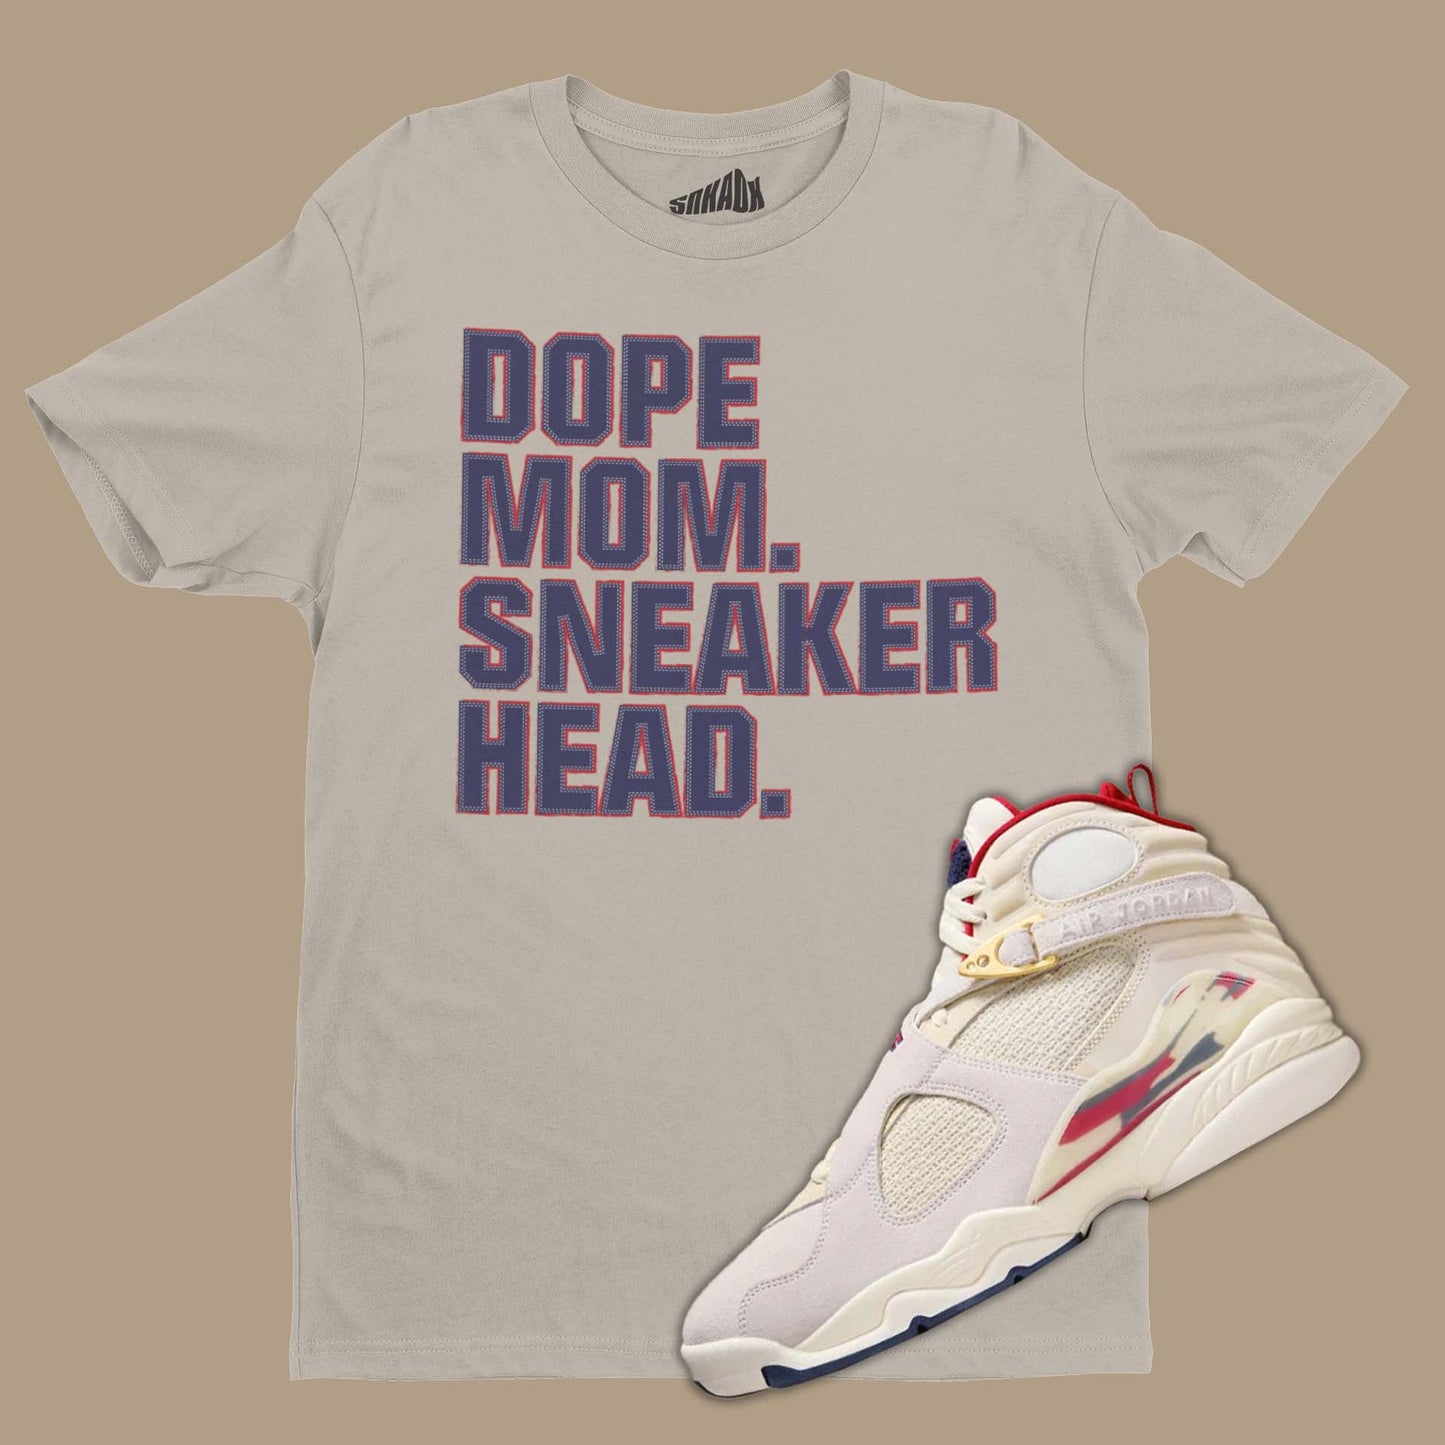 Dope Mom Sneakerhead T-Shirt Matching SoleFly x Air Jordan 8 Mi Casa Es Su Casa